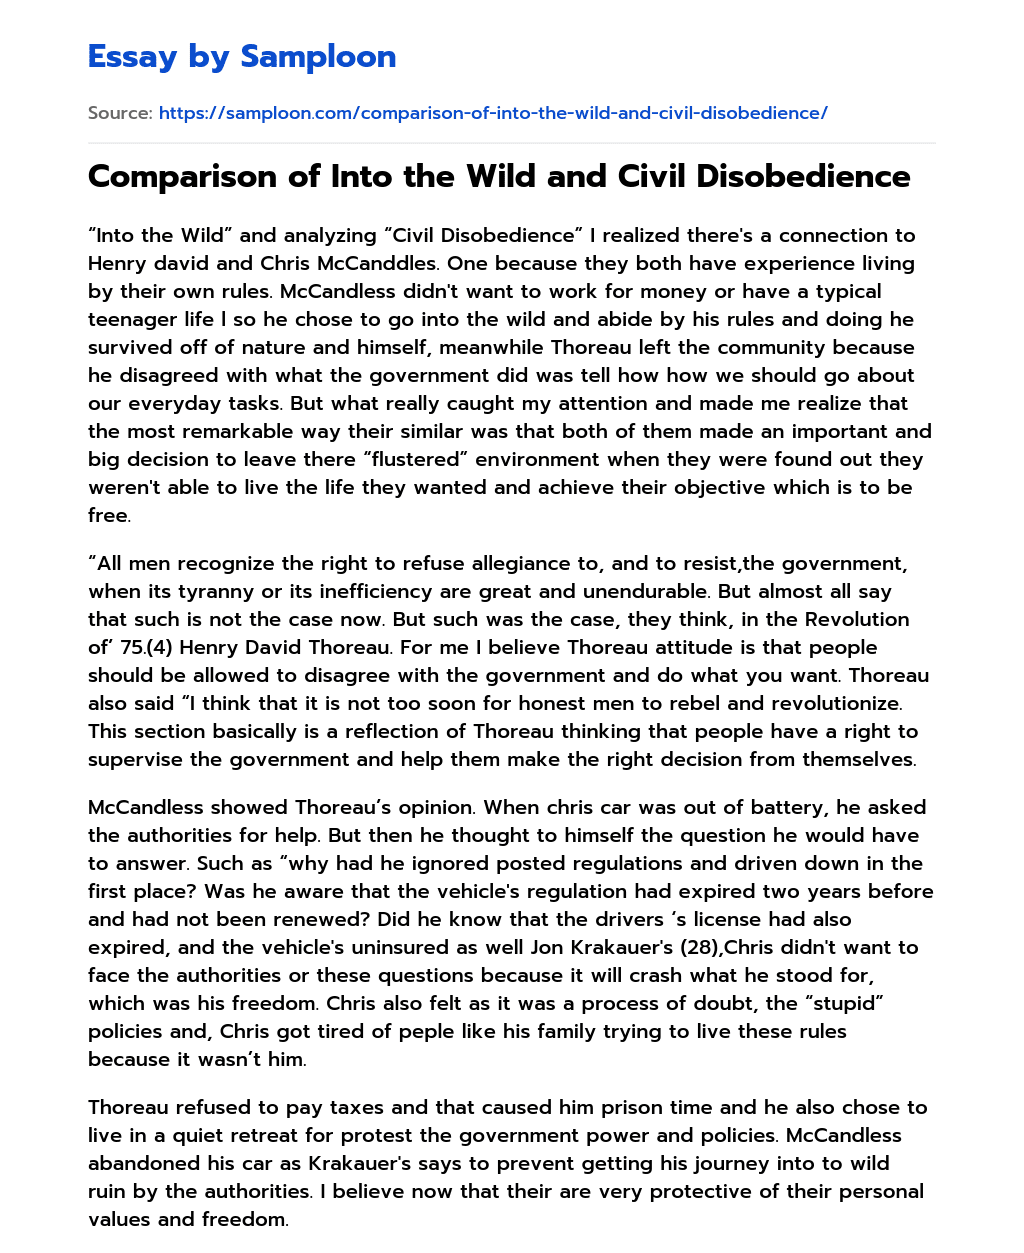 Comparison of Into the Wild and Civil Disobedience Summary essay